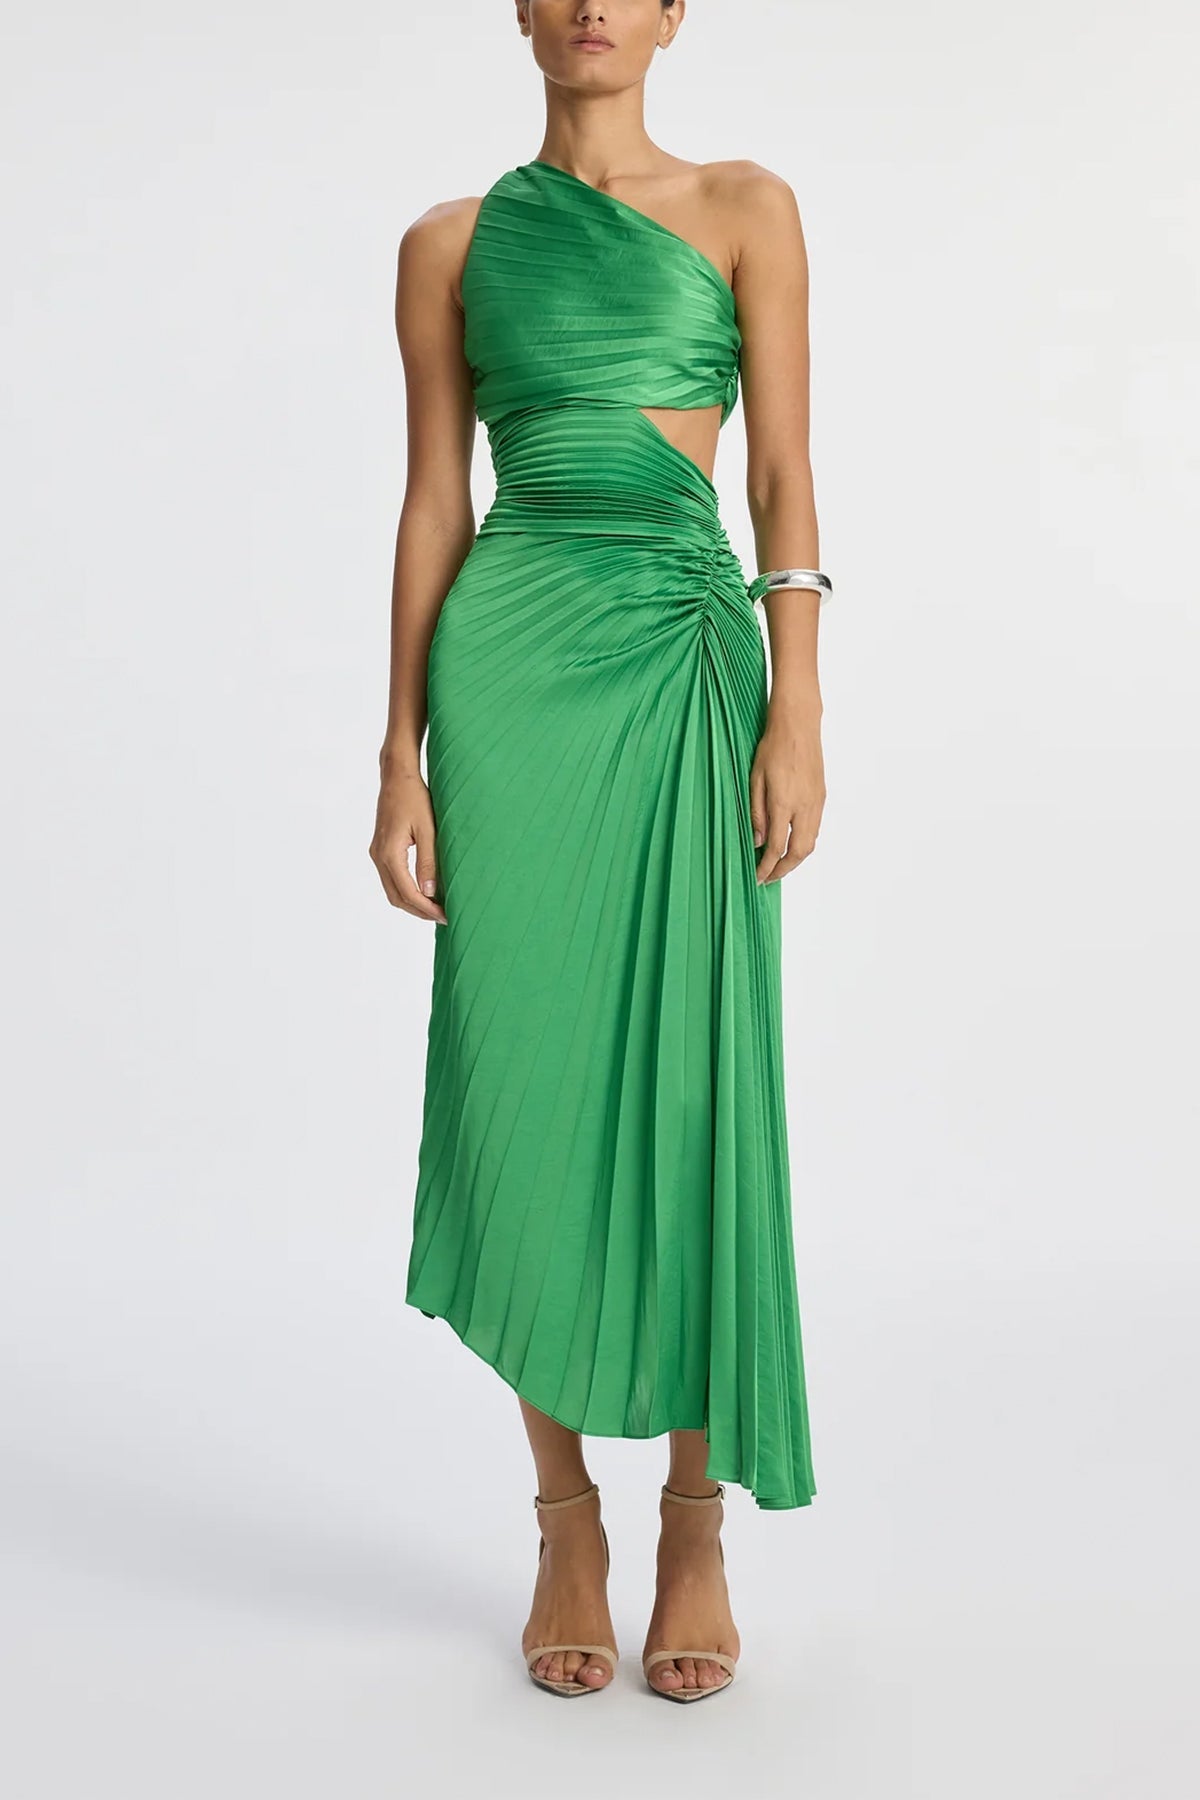 Dahlia Satin Pleated Dress in Basil - shop-olivia.com